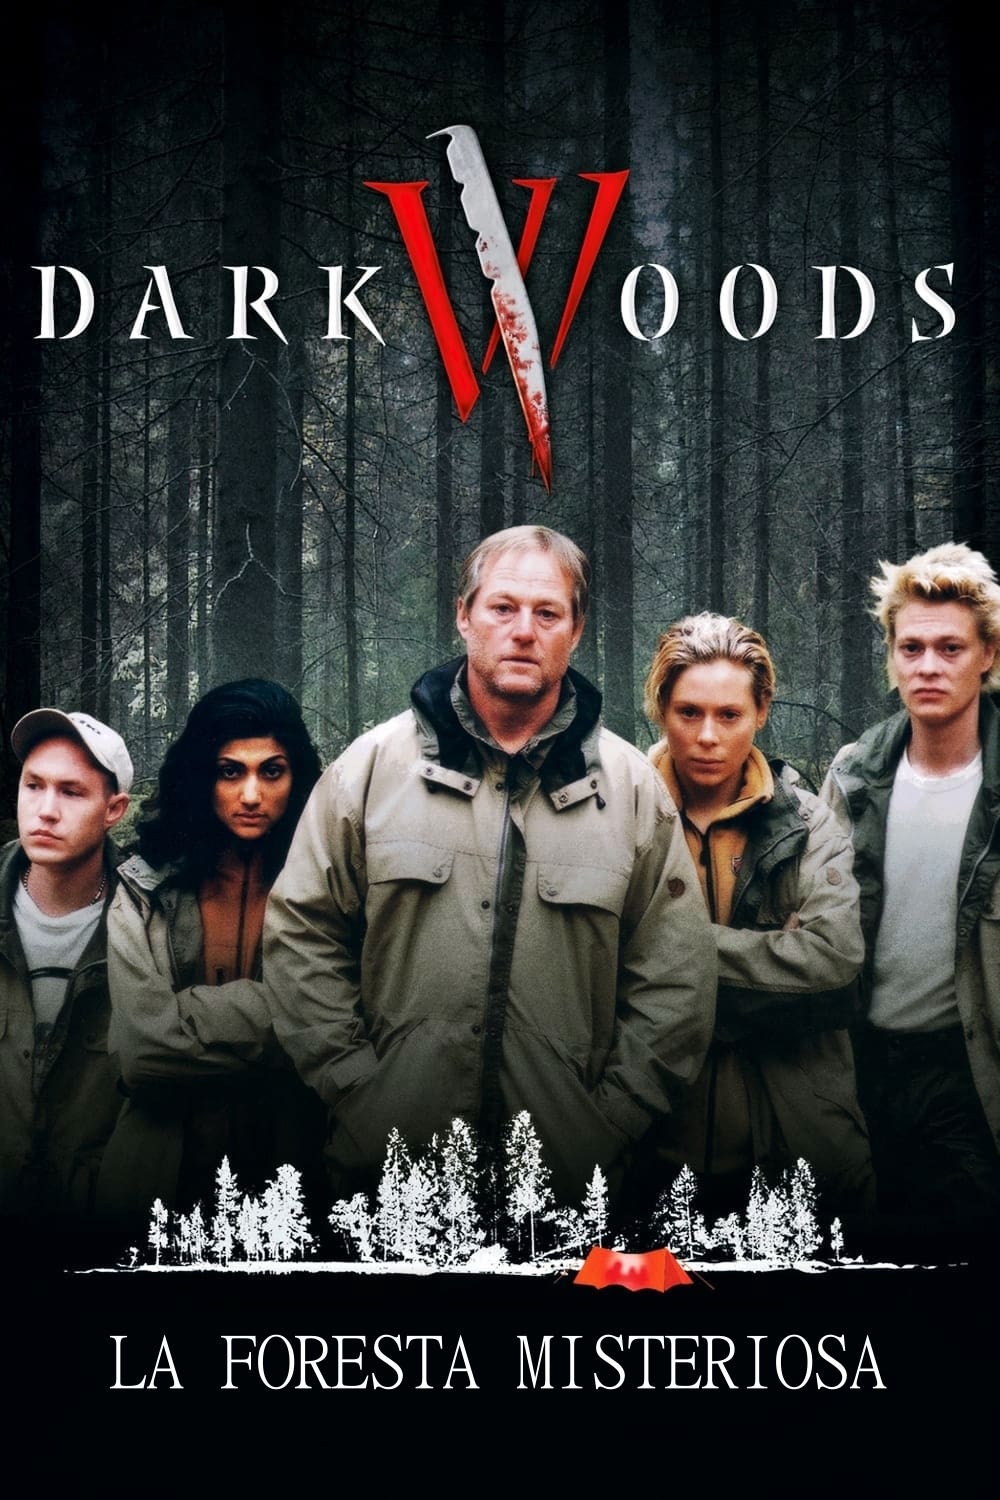 Dark Woods – La foresta misteriosa [HD] (2003)